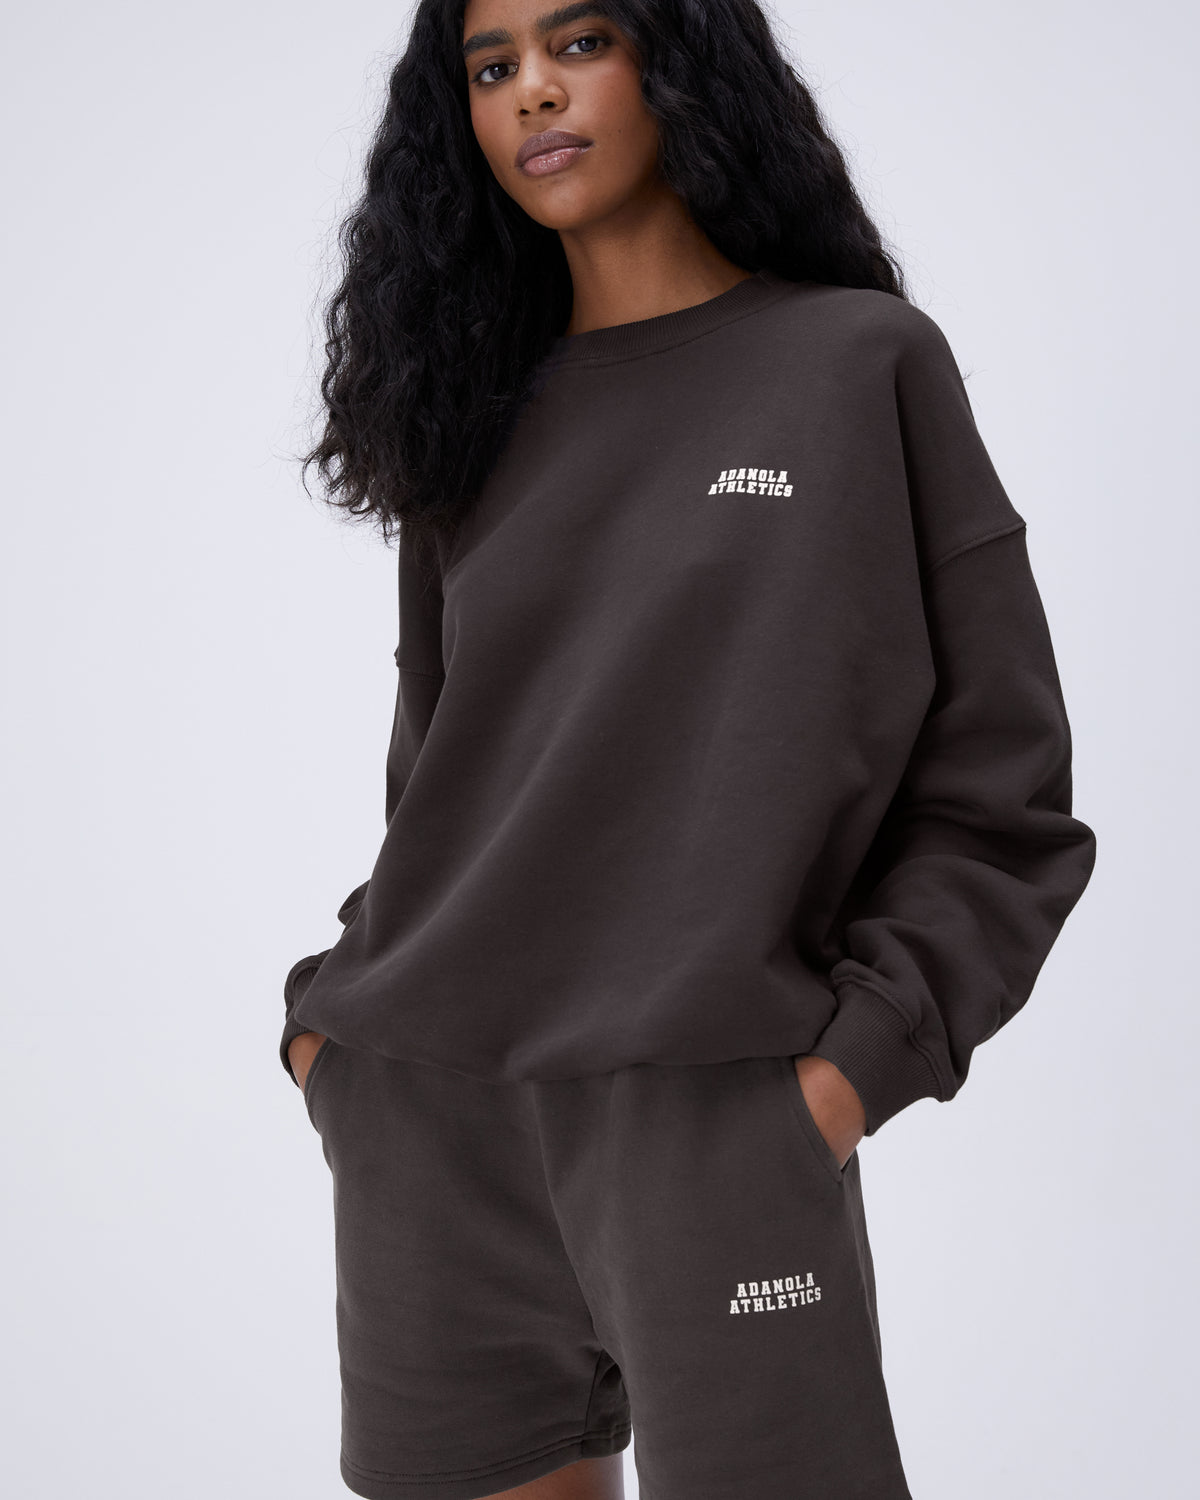 Meddele venom Se venligst Women's Oversized Sweatshirt - Coffee Bean| Adanola